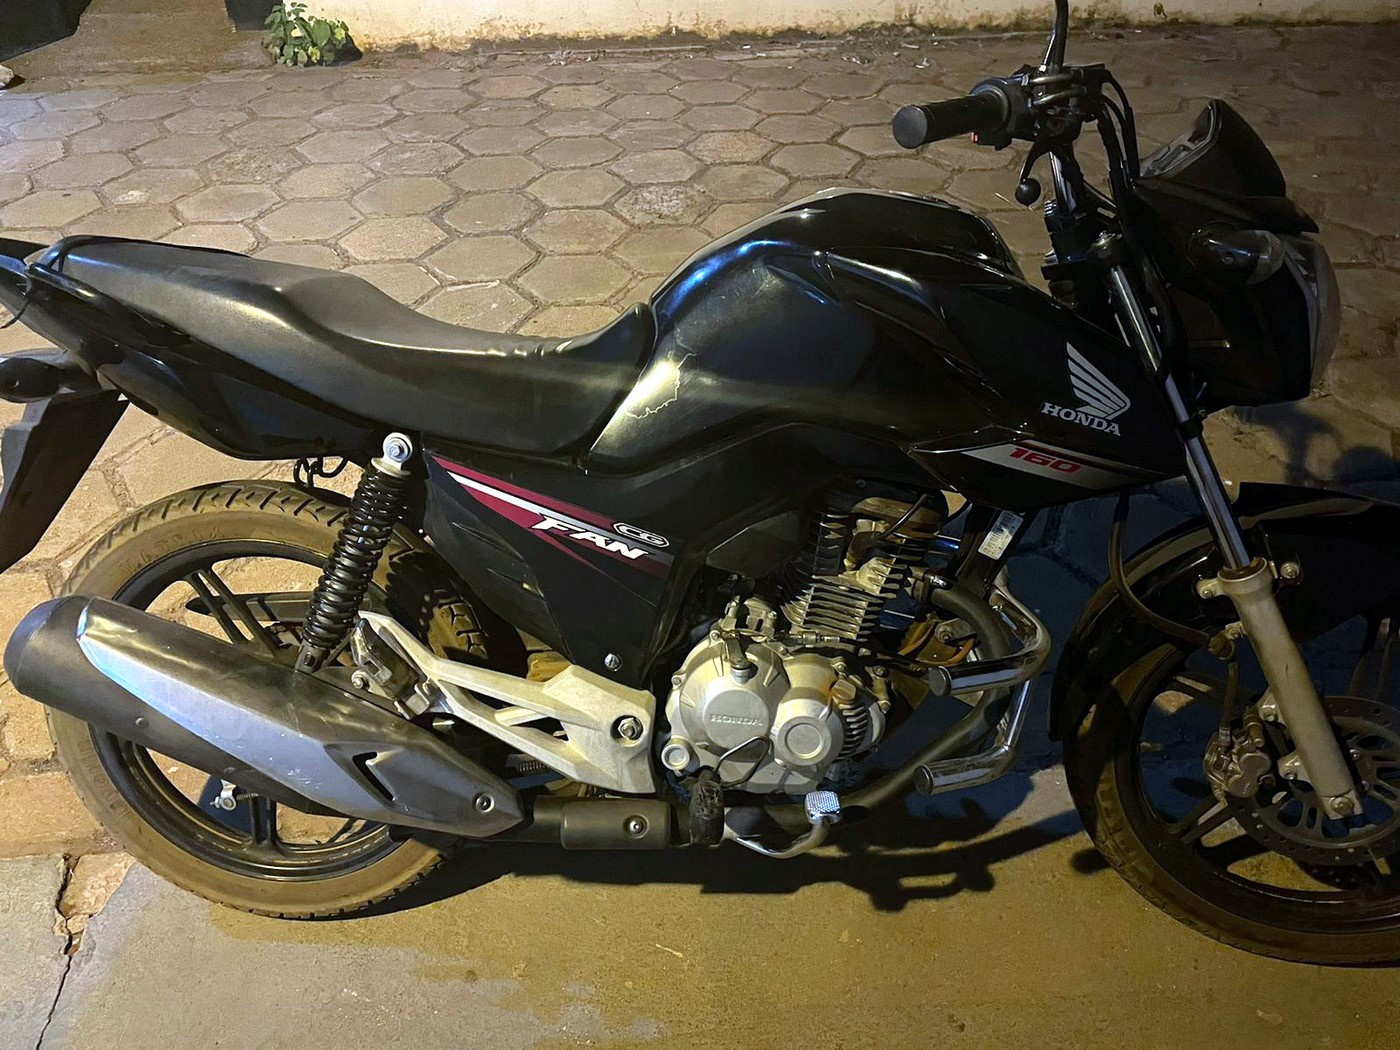 Motocicleta, marca Honda CG Fan 160, preta, ano 2017, furtada em 18/07/22